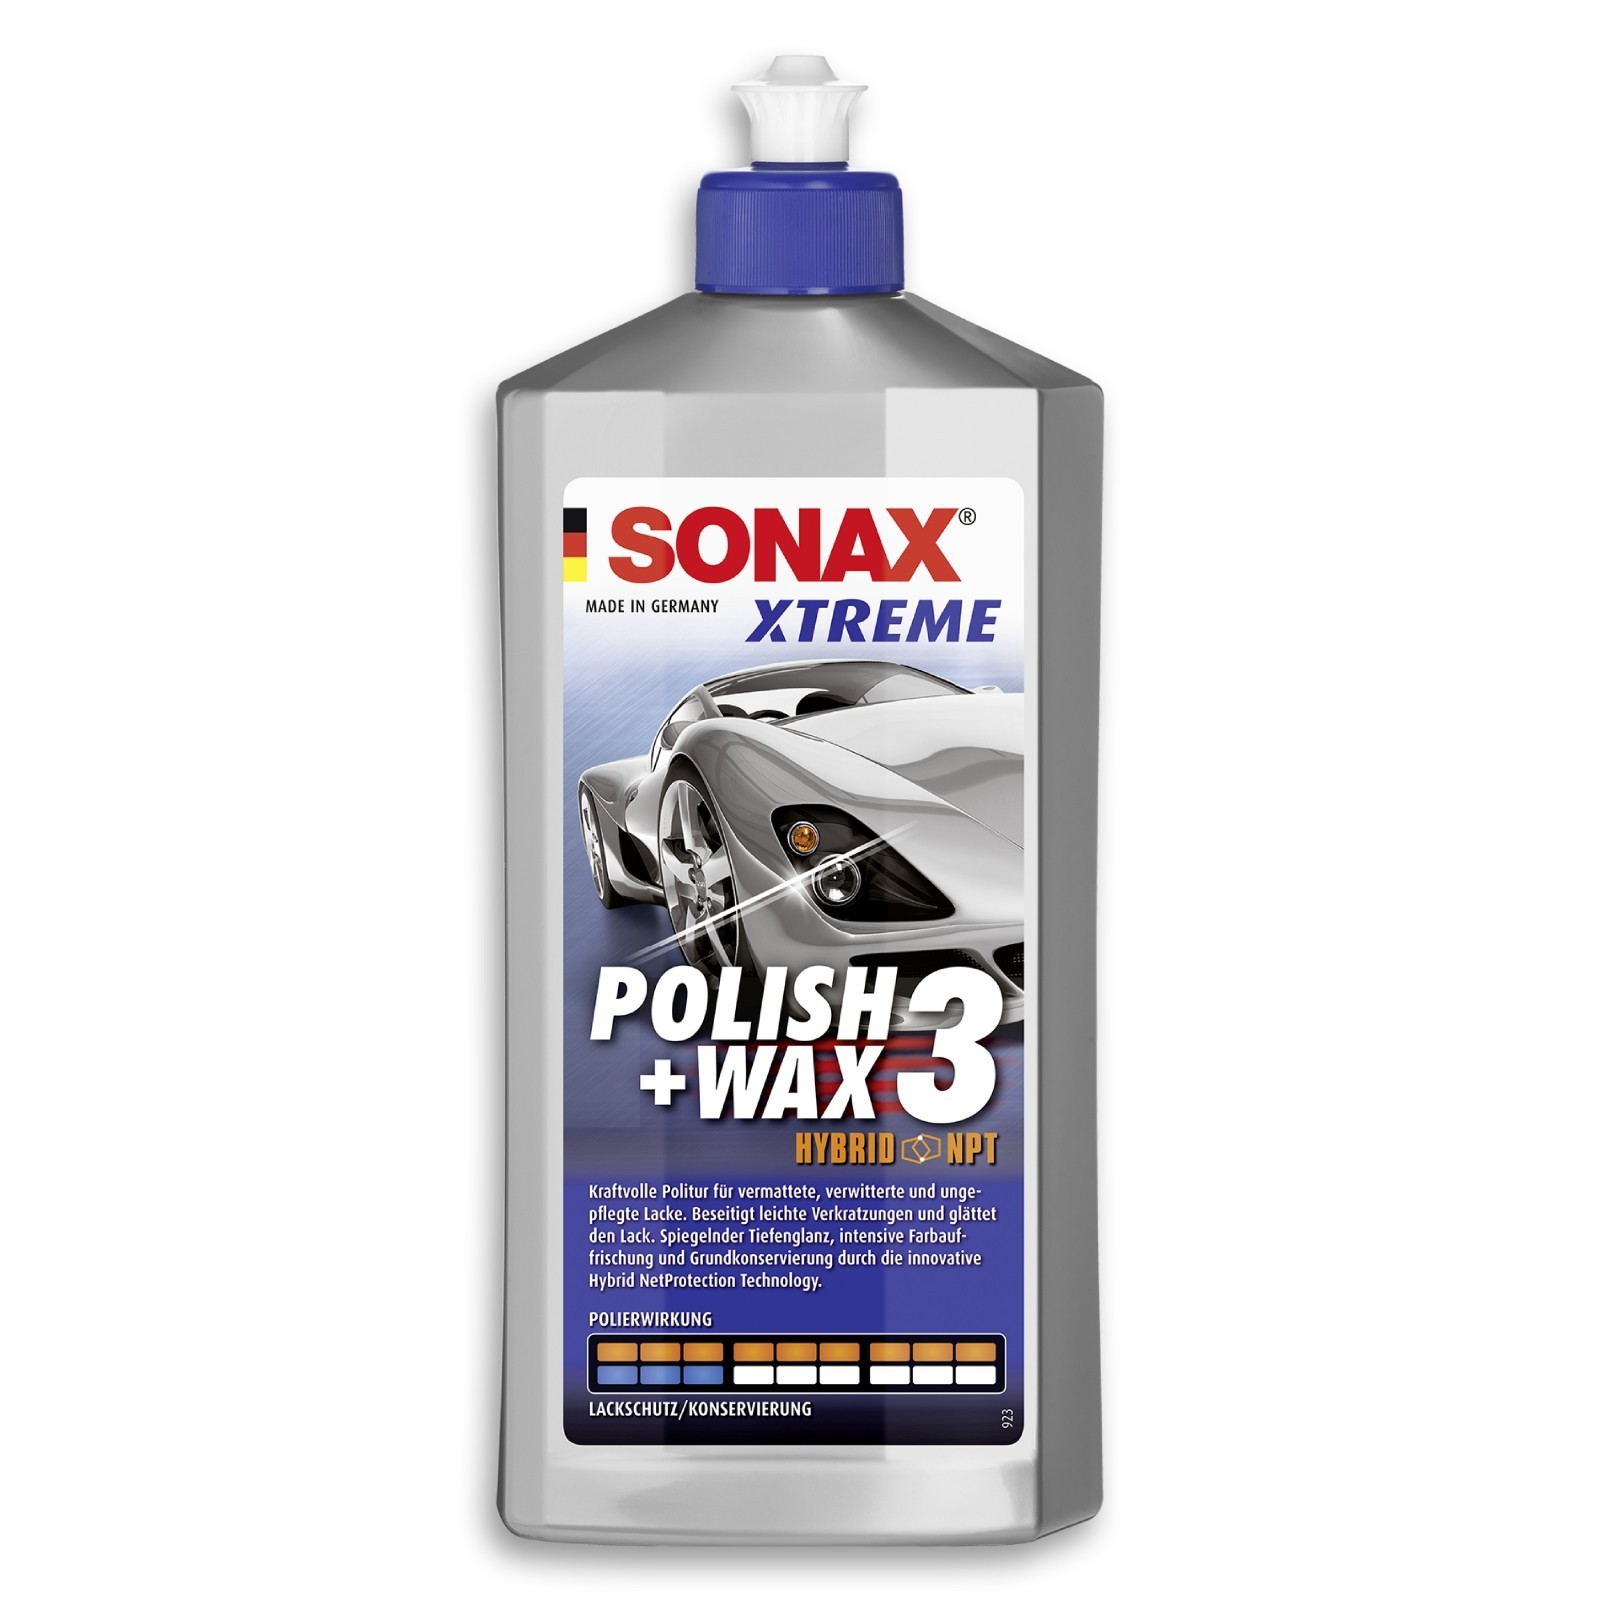 SONAX Xtreme Polish+Wax 3 Hybrid NPT ( 500 ml ), Art.-Nr. 02022000